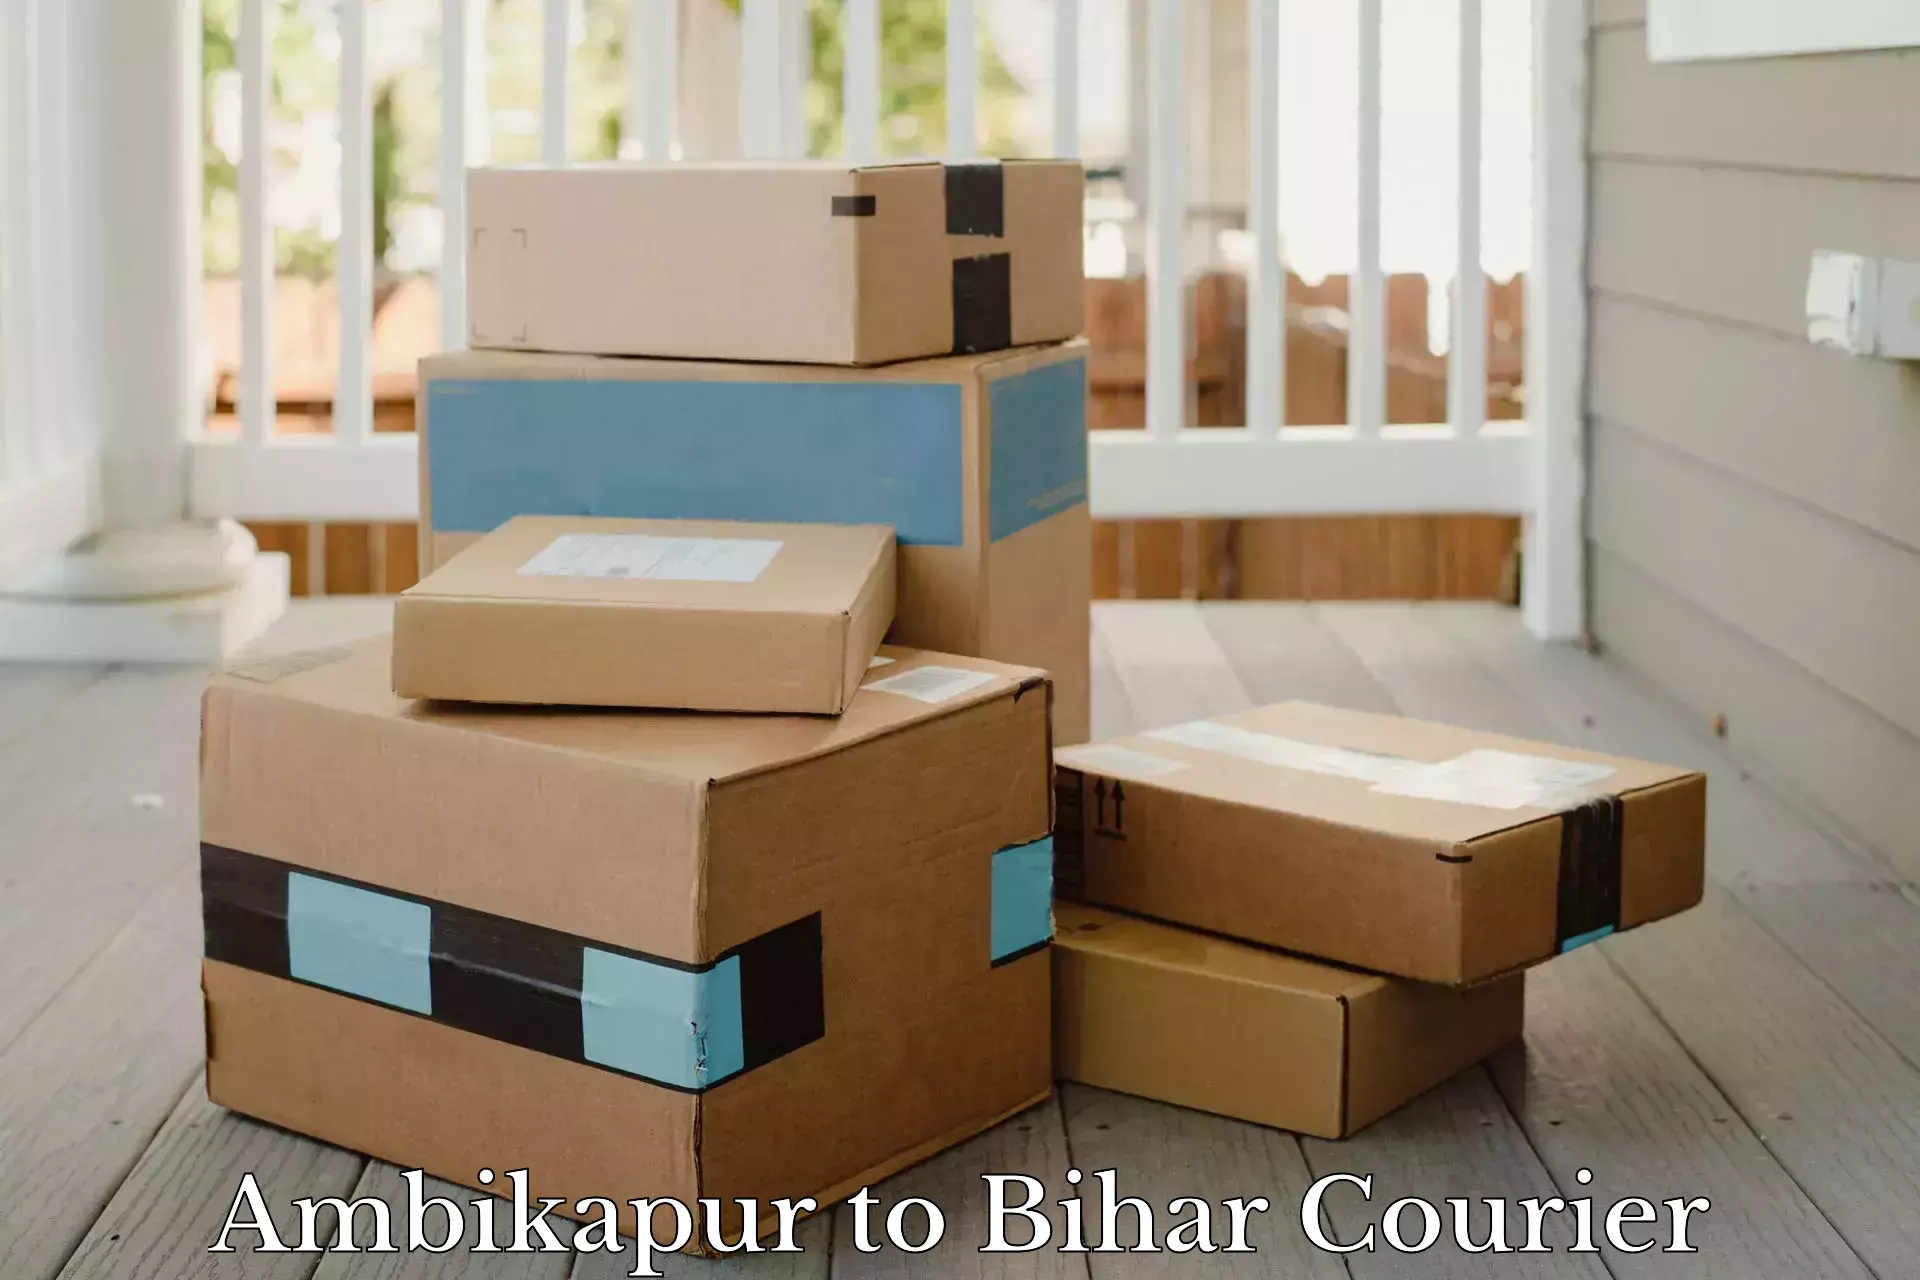 Express postal services Ambikapur to Bihar